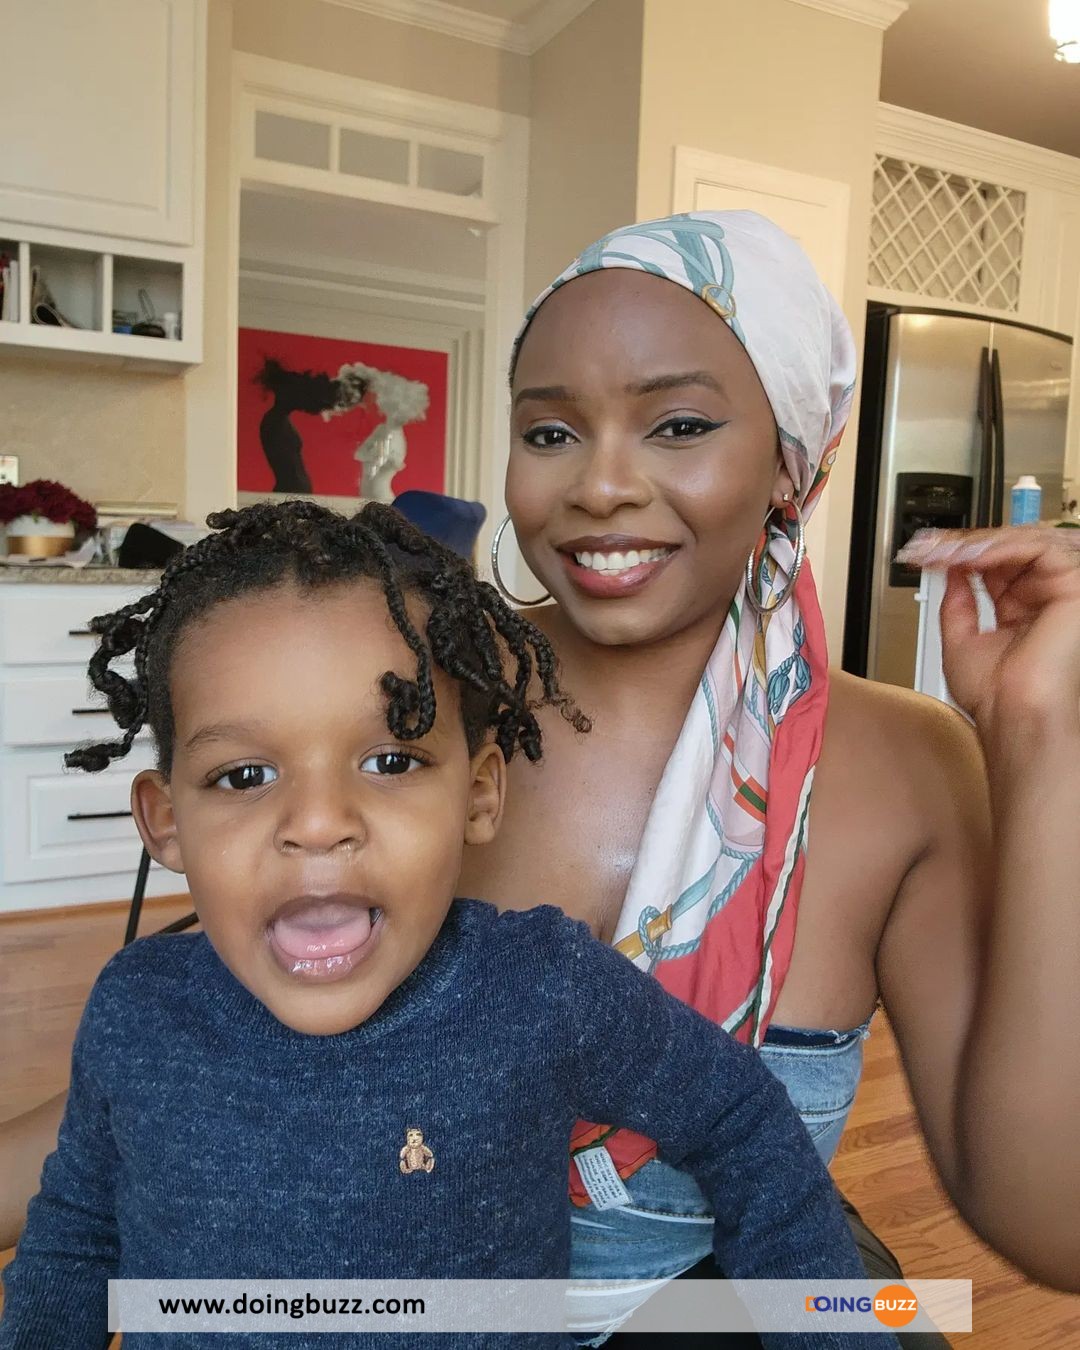 Yemi Alade, La Star Nigériane Révèle Enfin Son Fils Sur Instagram